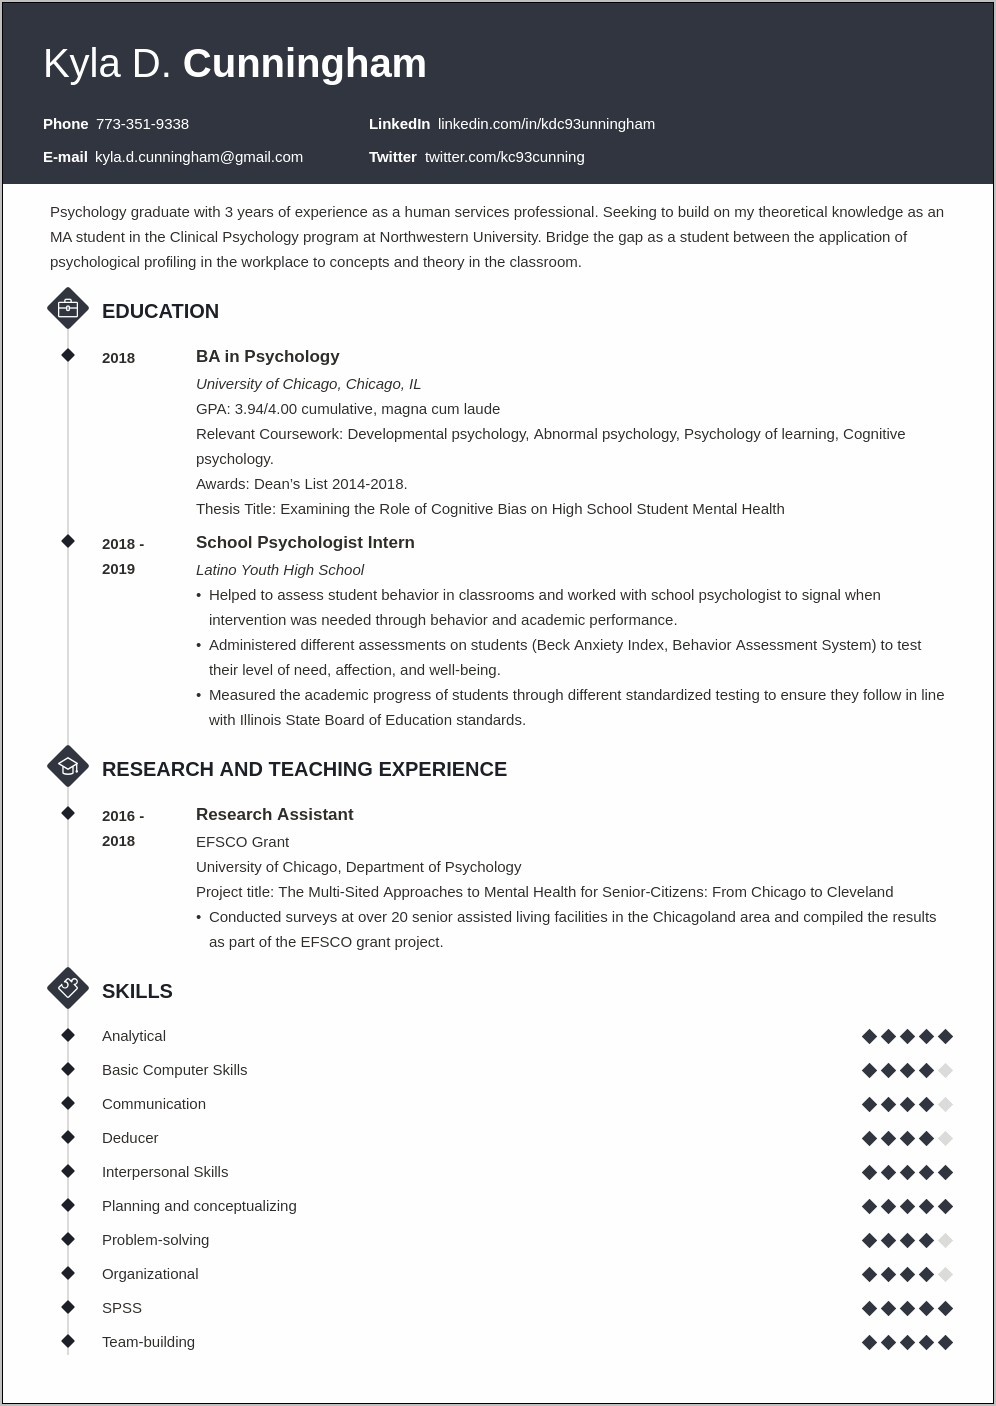 Resume Summary Master's Degree Application